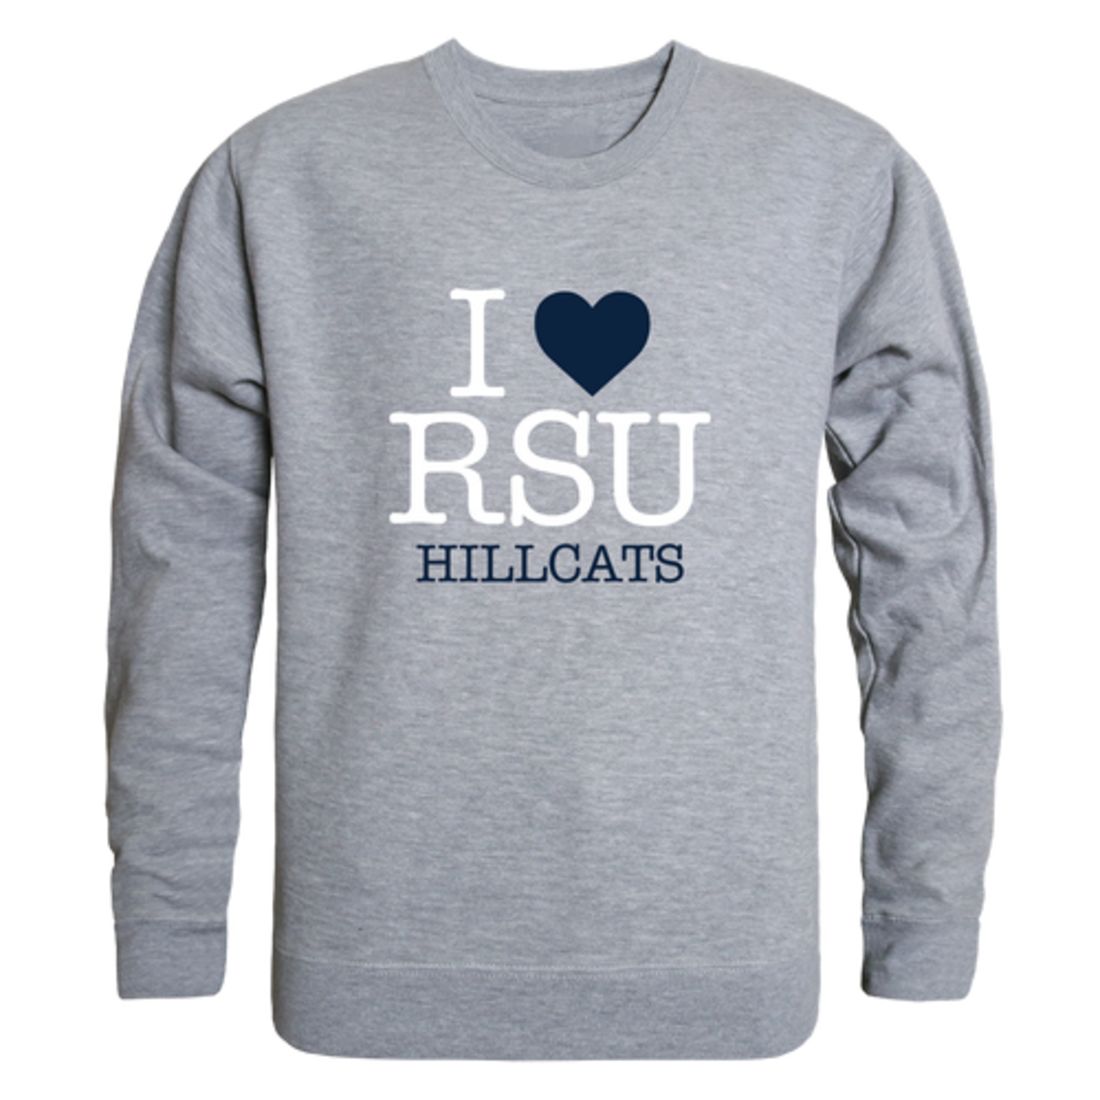 I-Love-Rogers-State-University-Hillcats-Fleece-Crewneck-Pullover-Sweatshirt